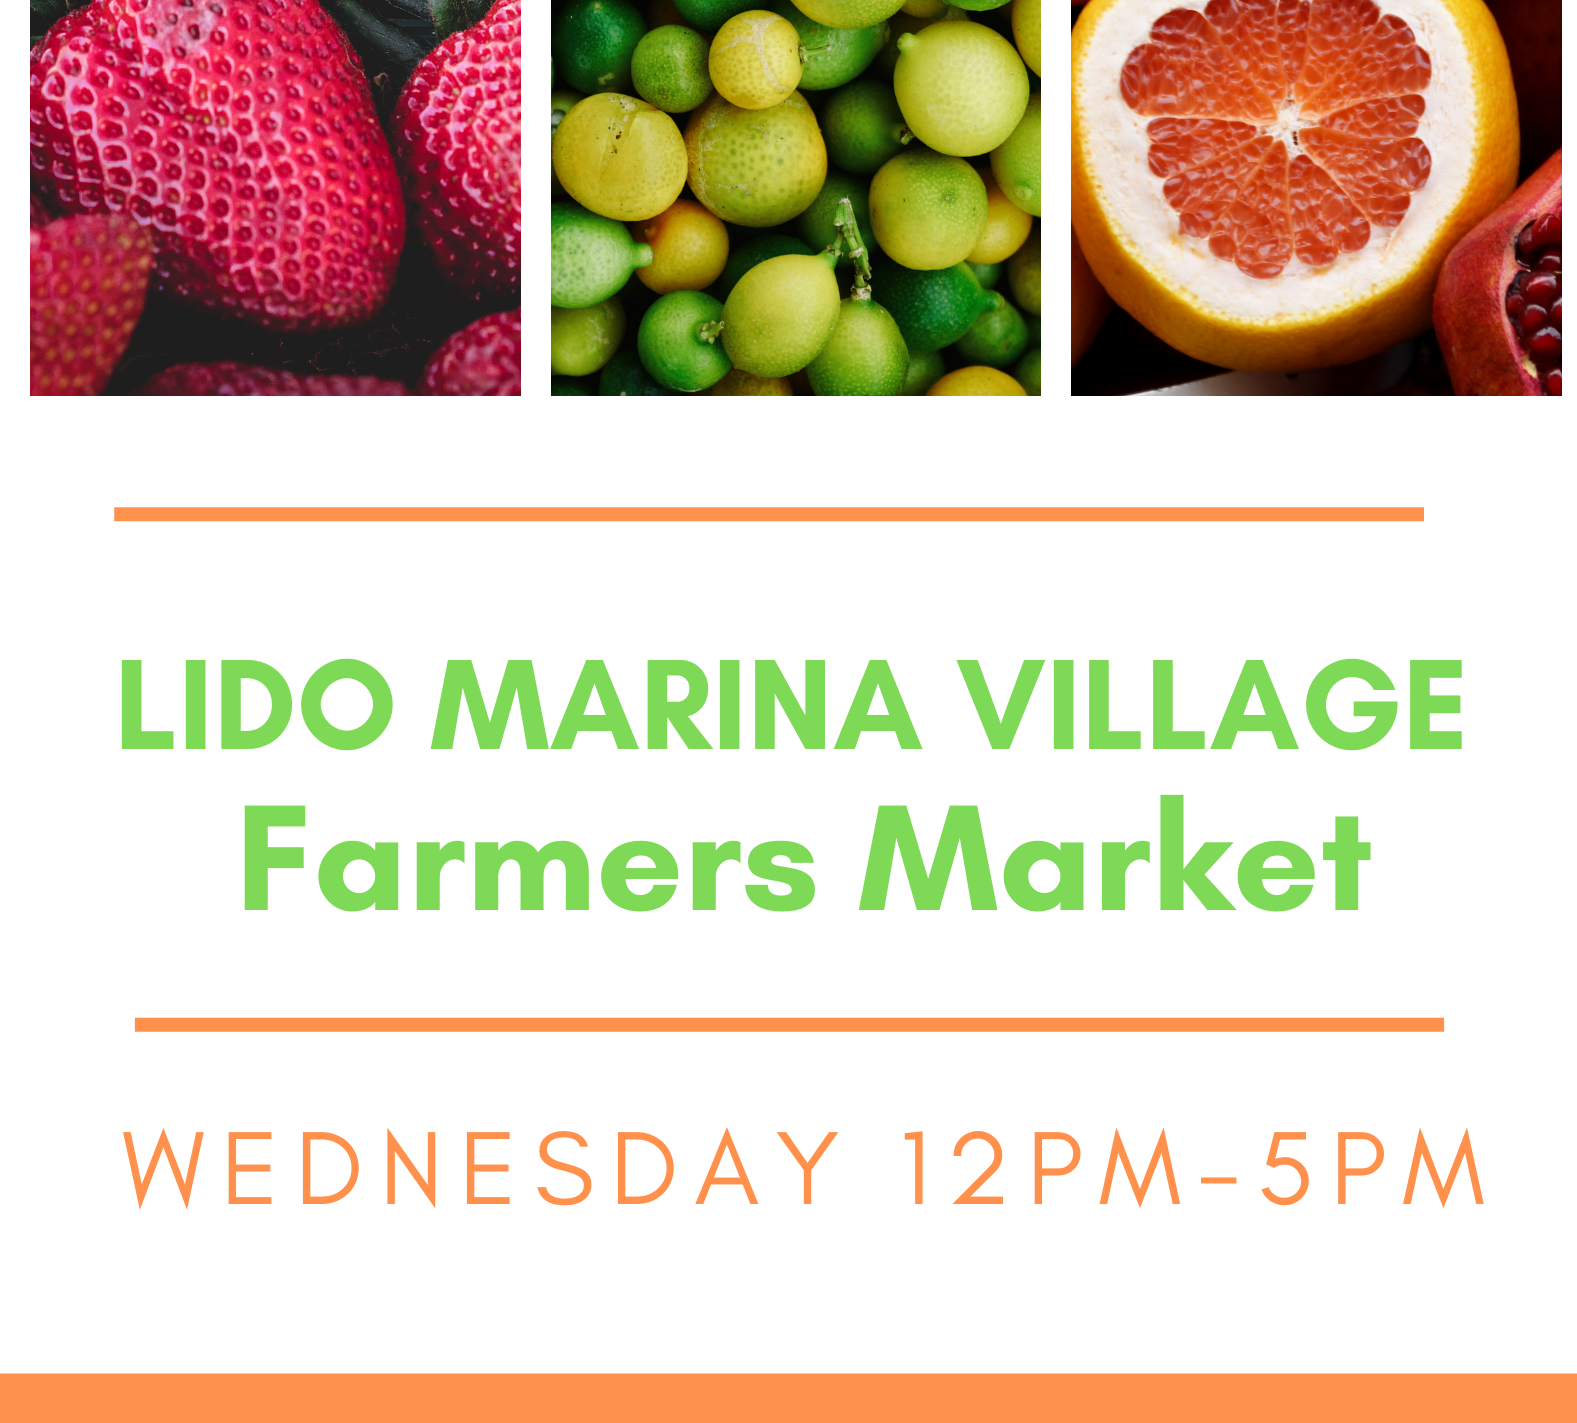 Lido Marina Village Farmers Market